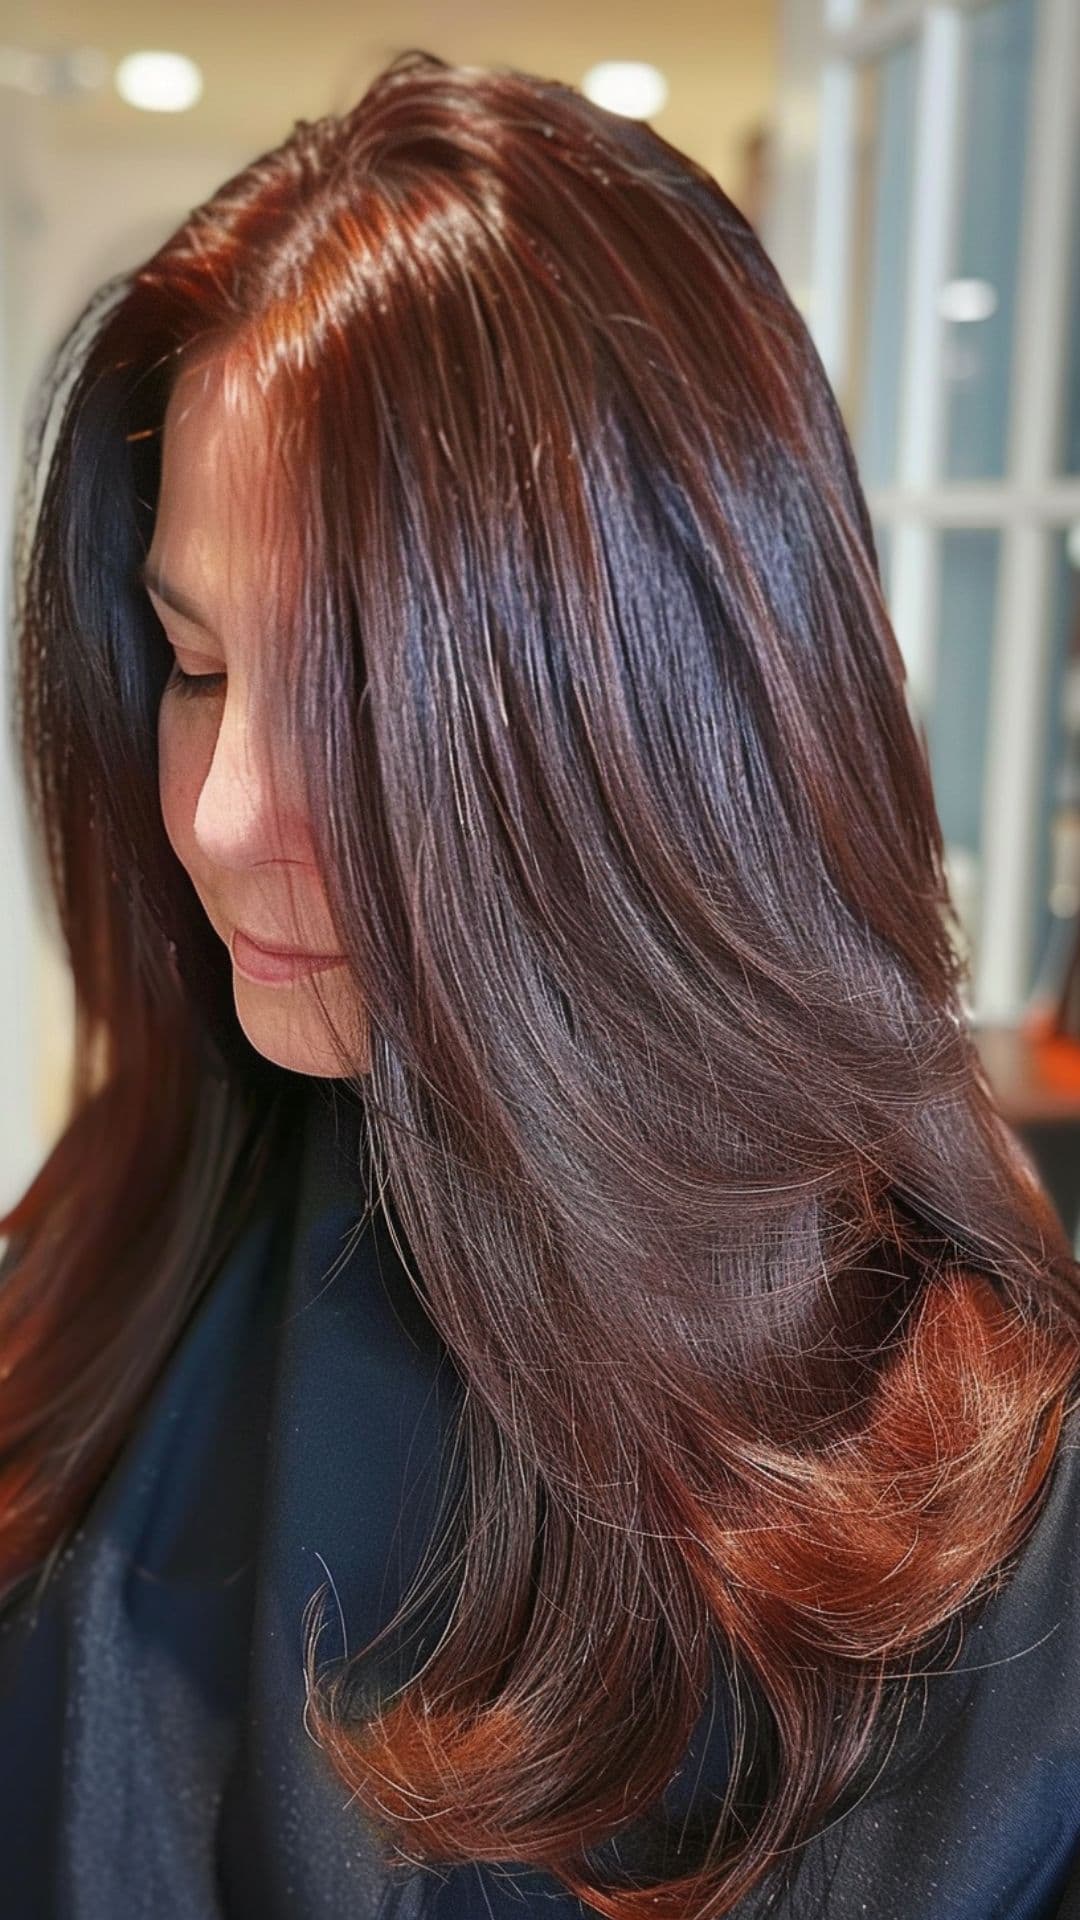 A woman modelling a sleek and shiny long hair.